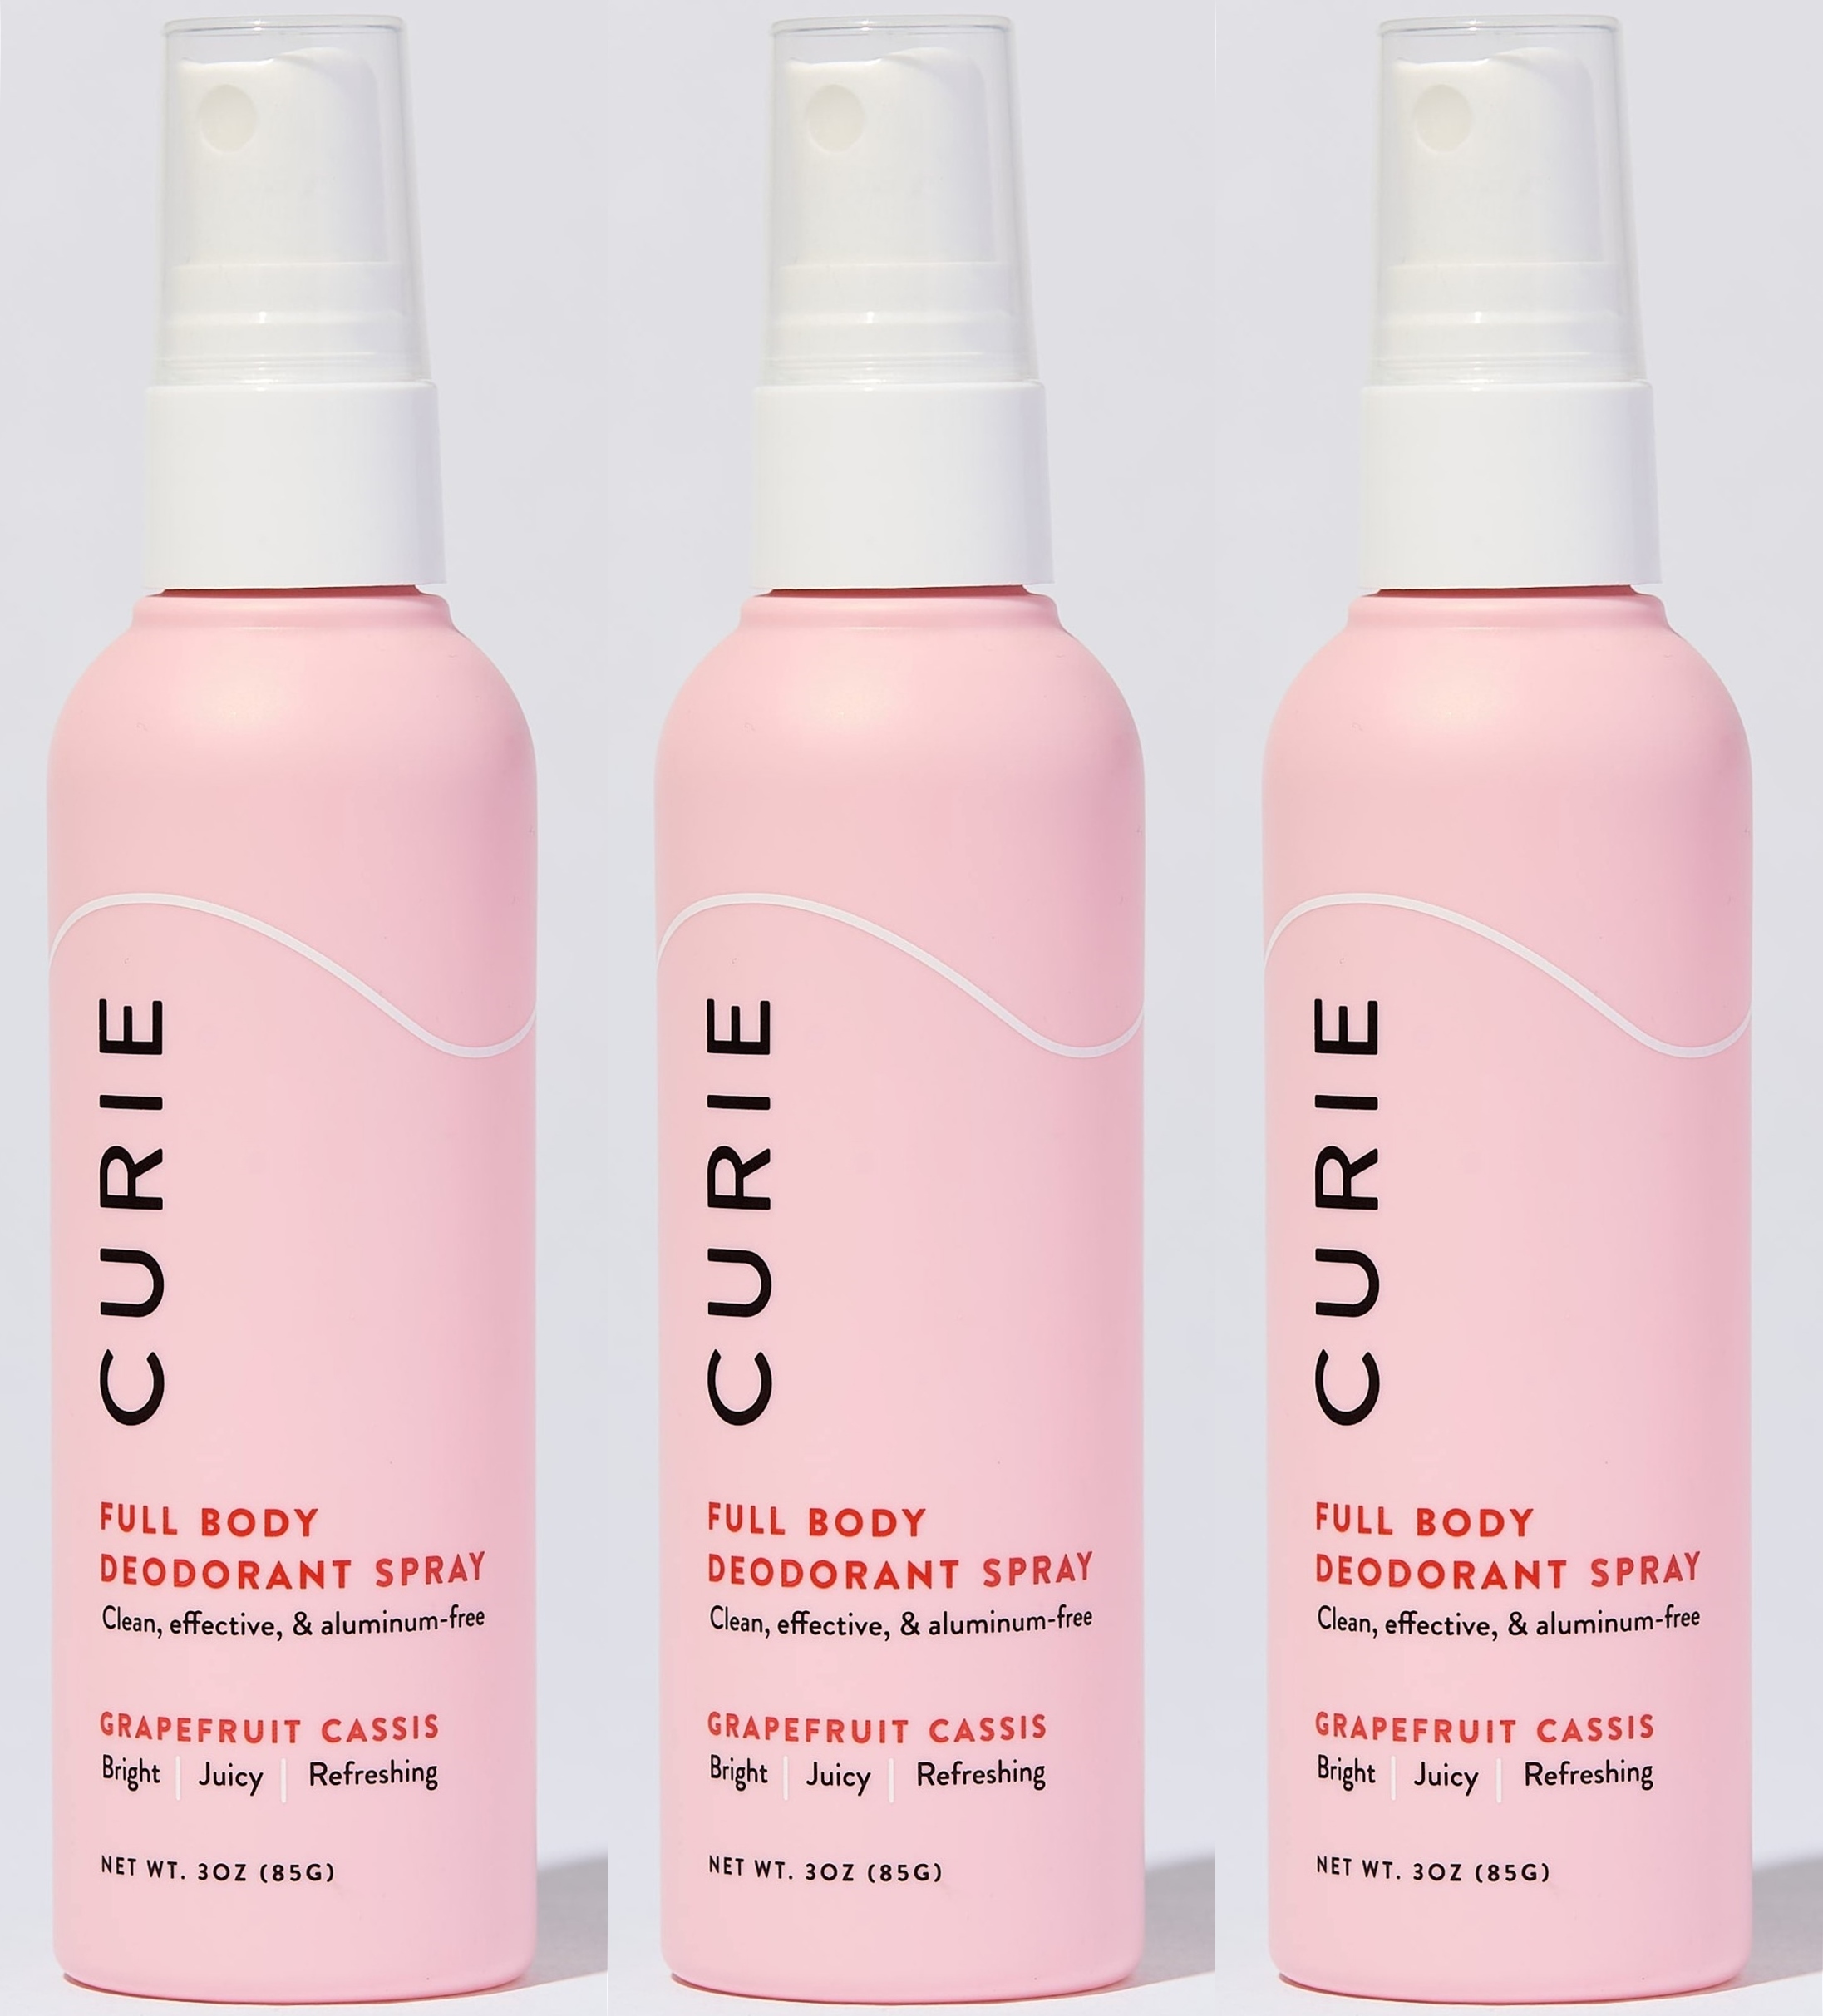 Curie Grapefruit Cassis Full Body Deodorant Spray